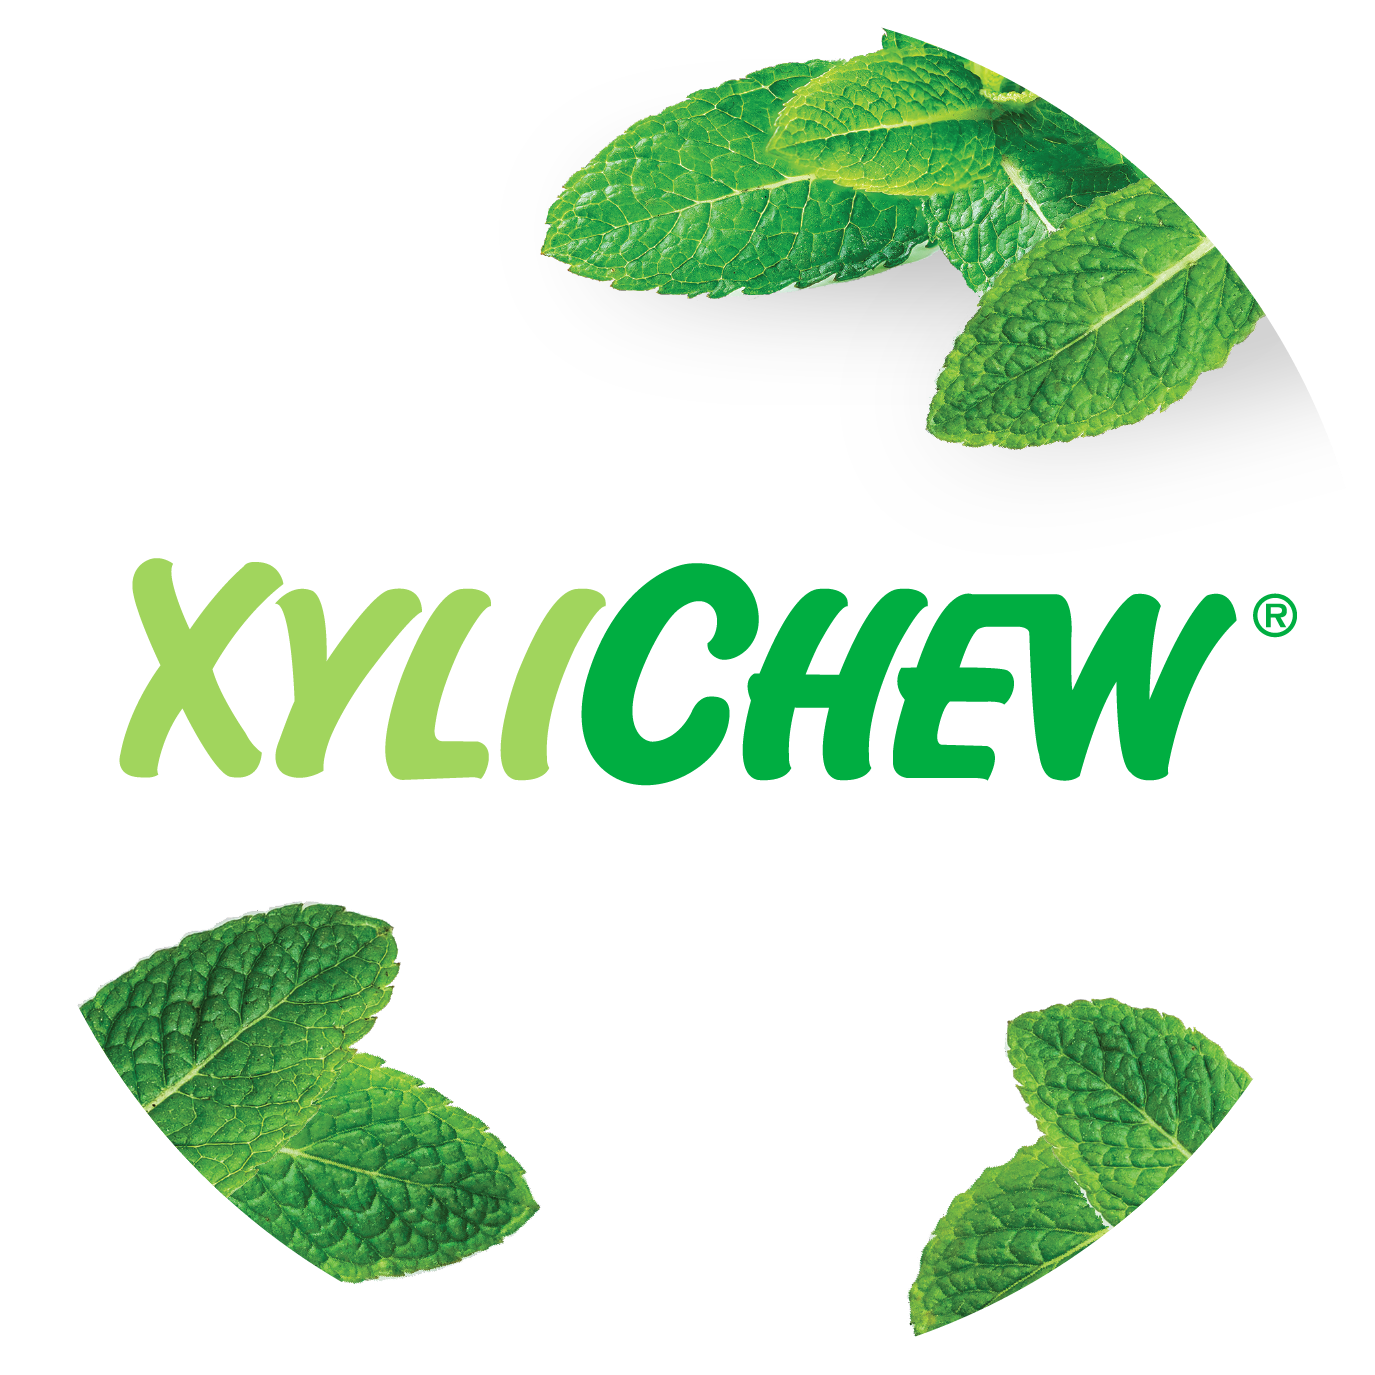 Xylichew Xylitol Gum - Ice Mint - Sugar Free - The Best Chewing Gum